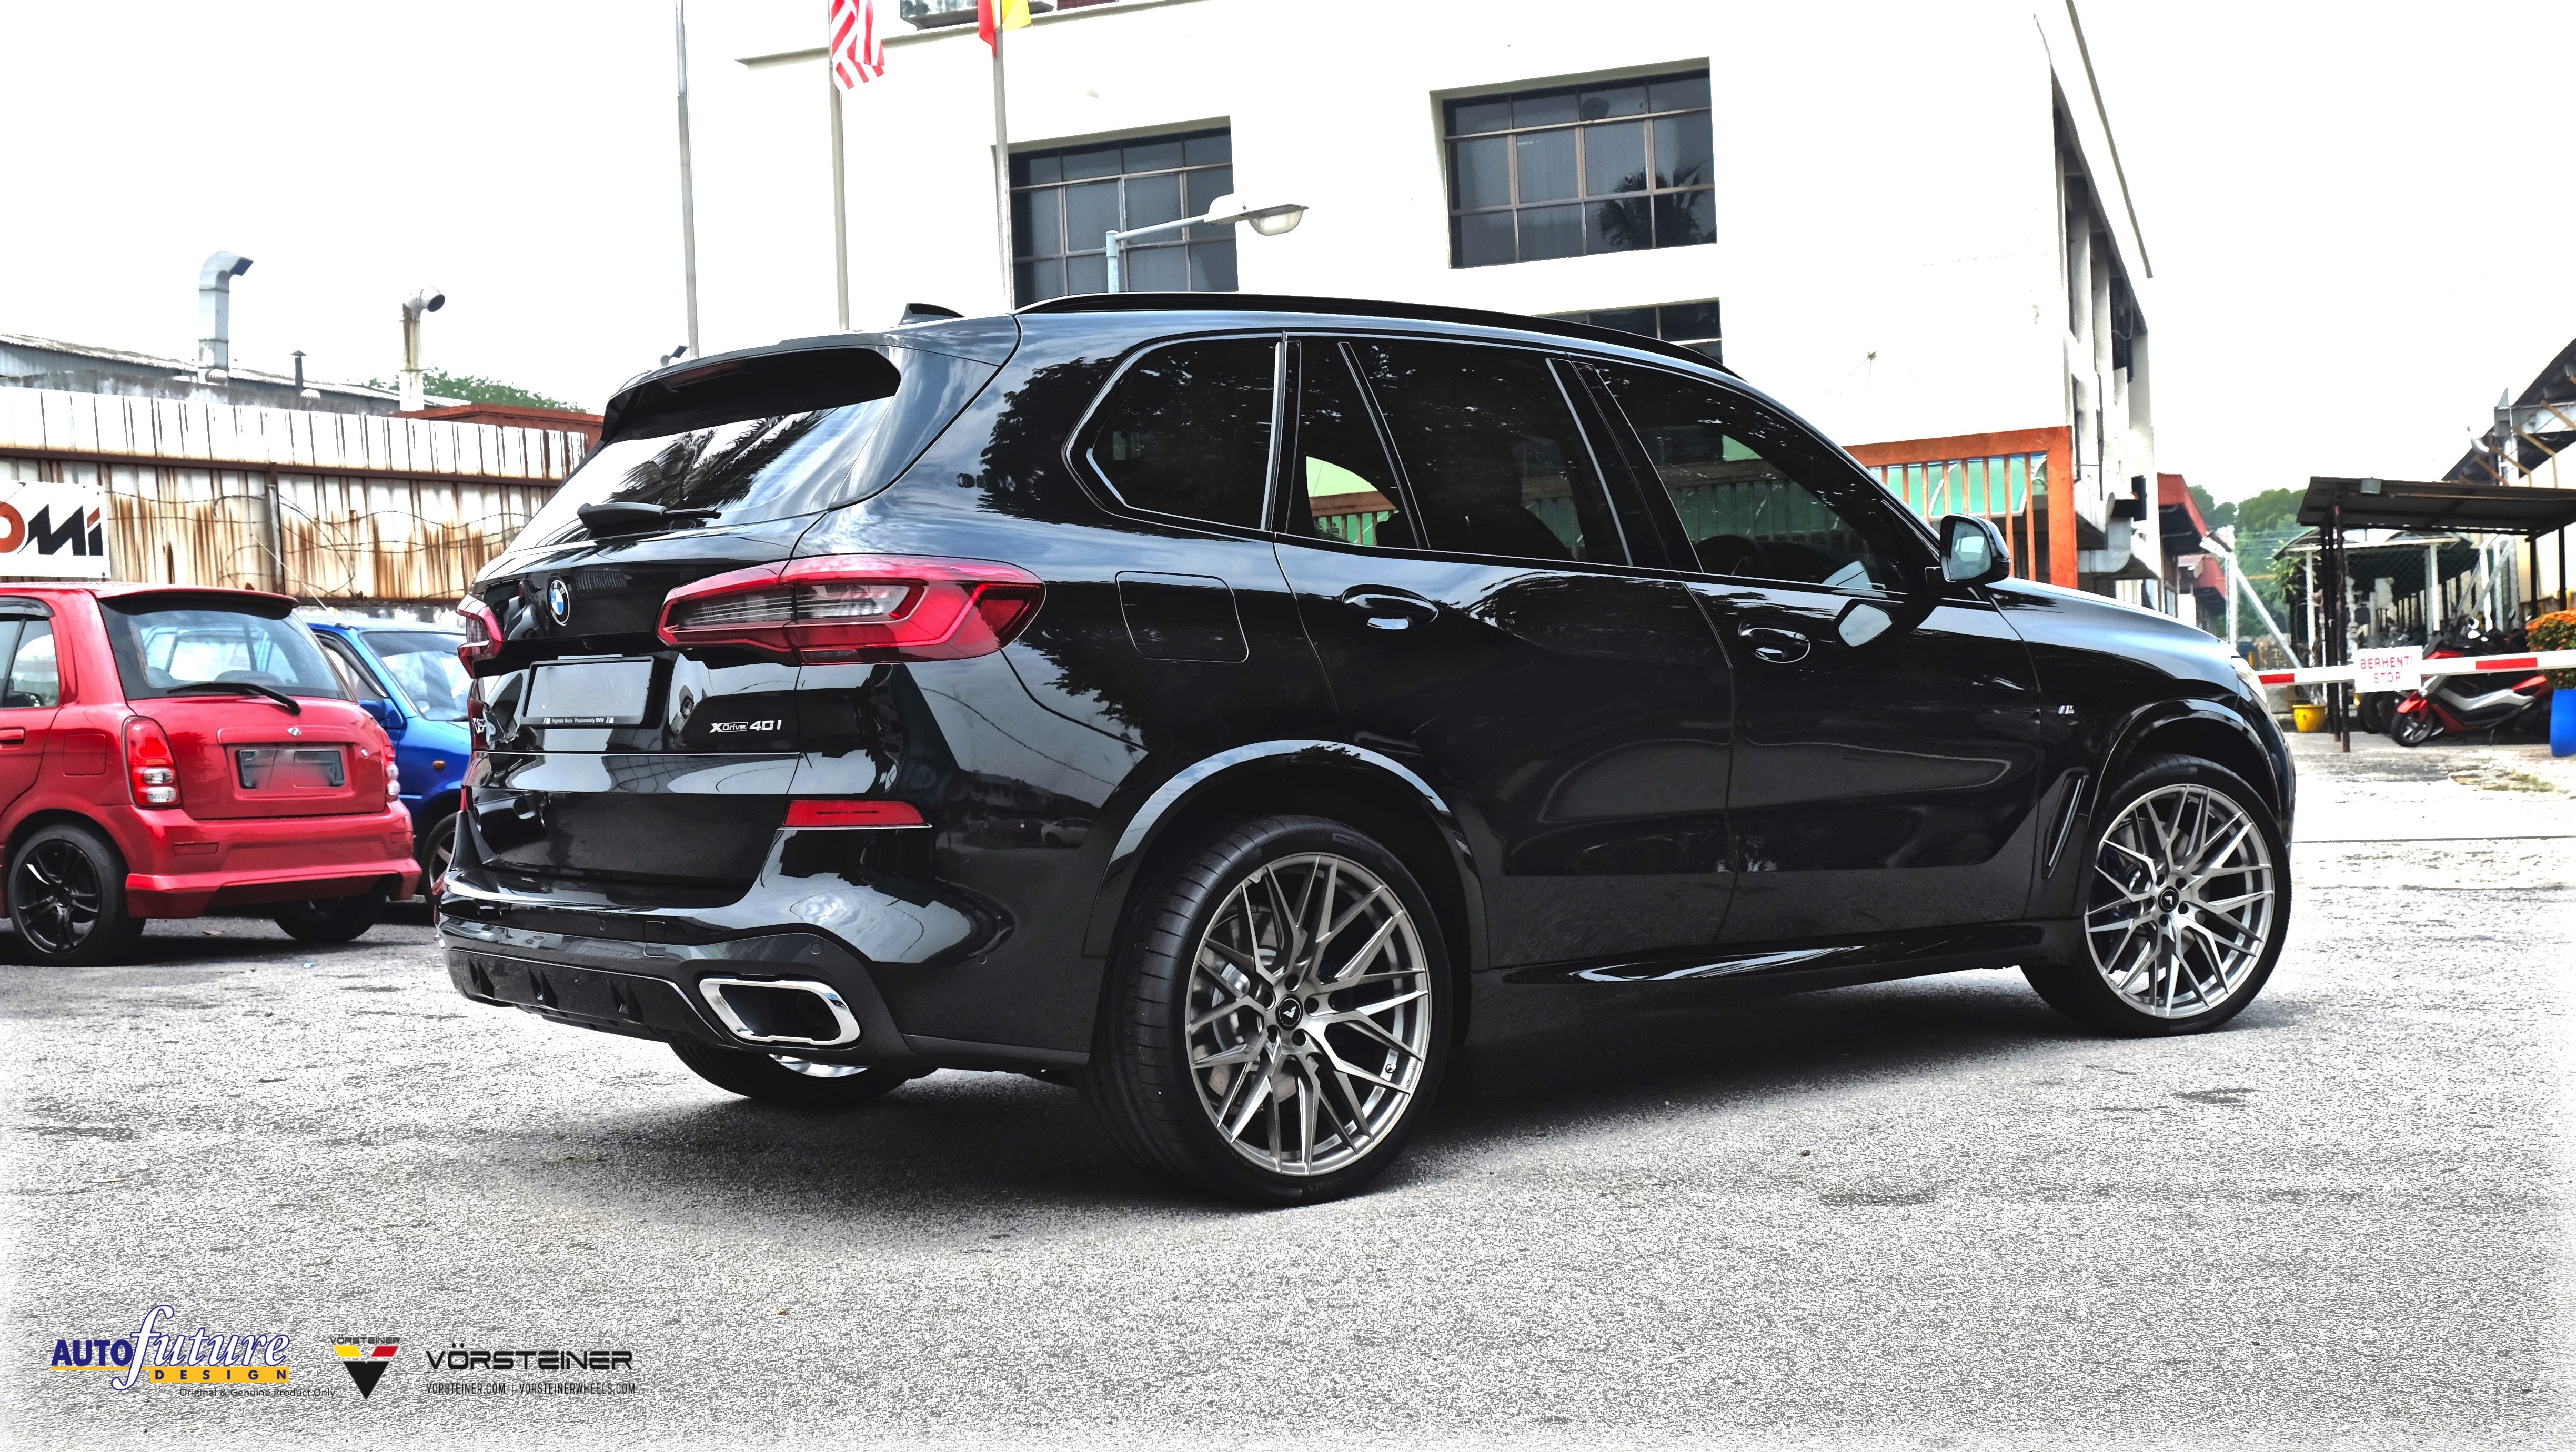 BMW X5 (G05) suv photo